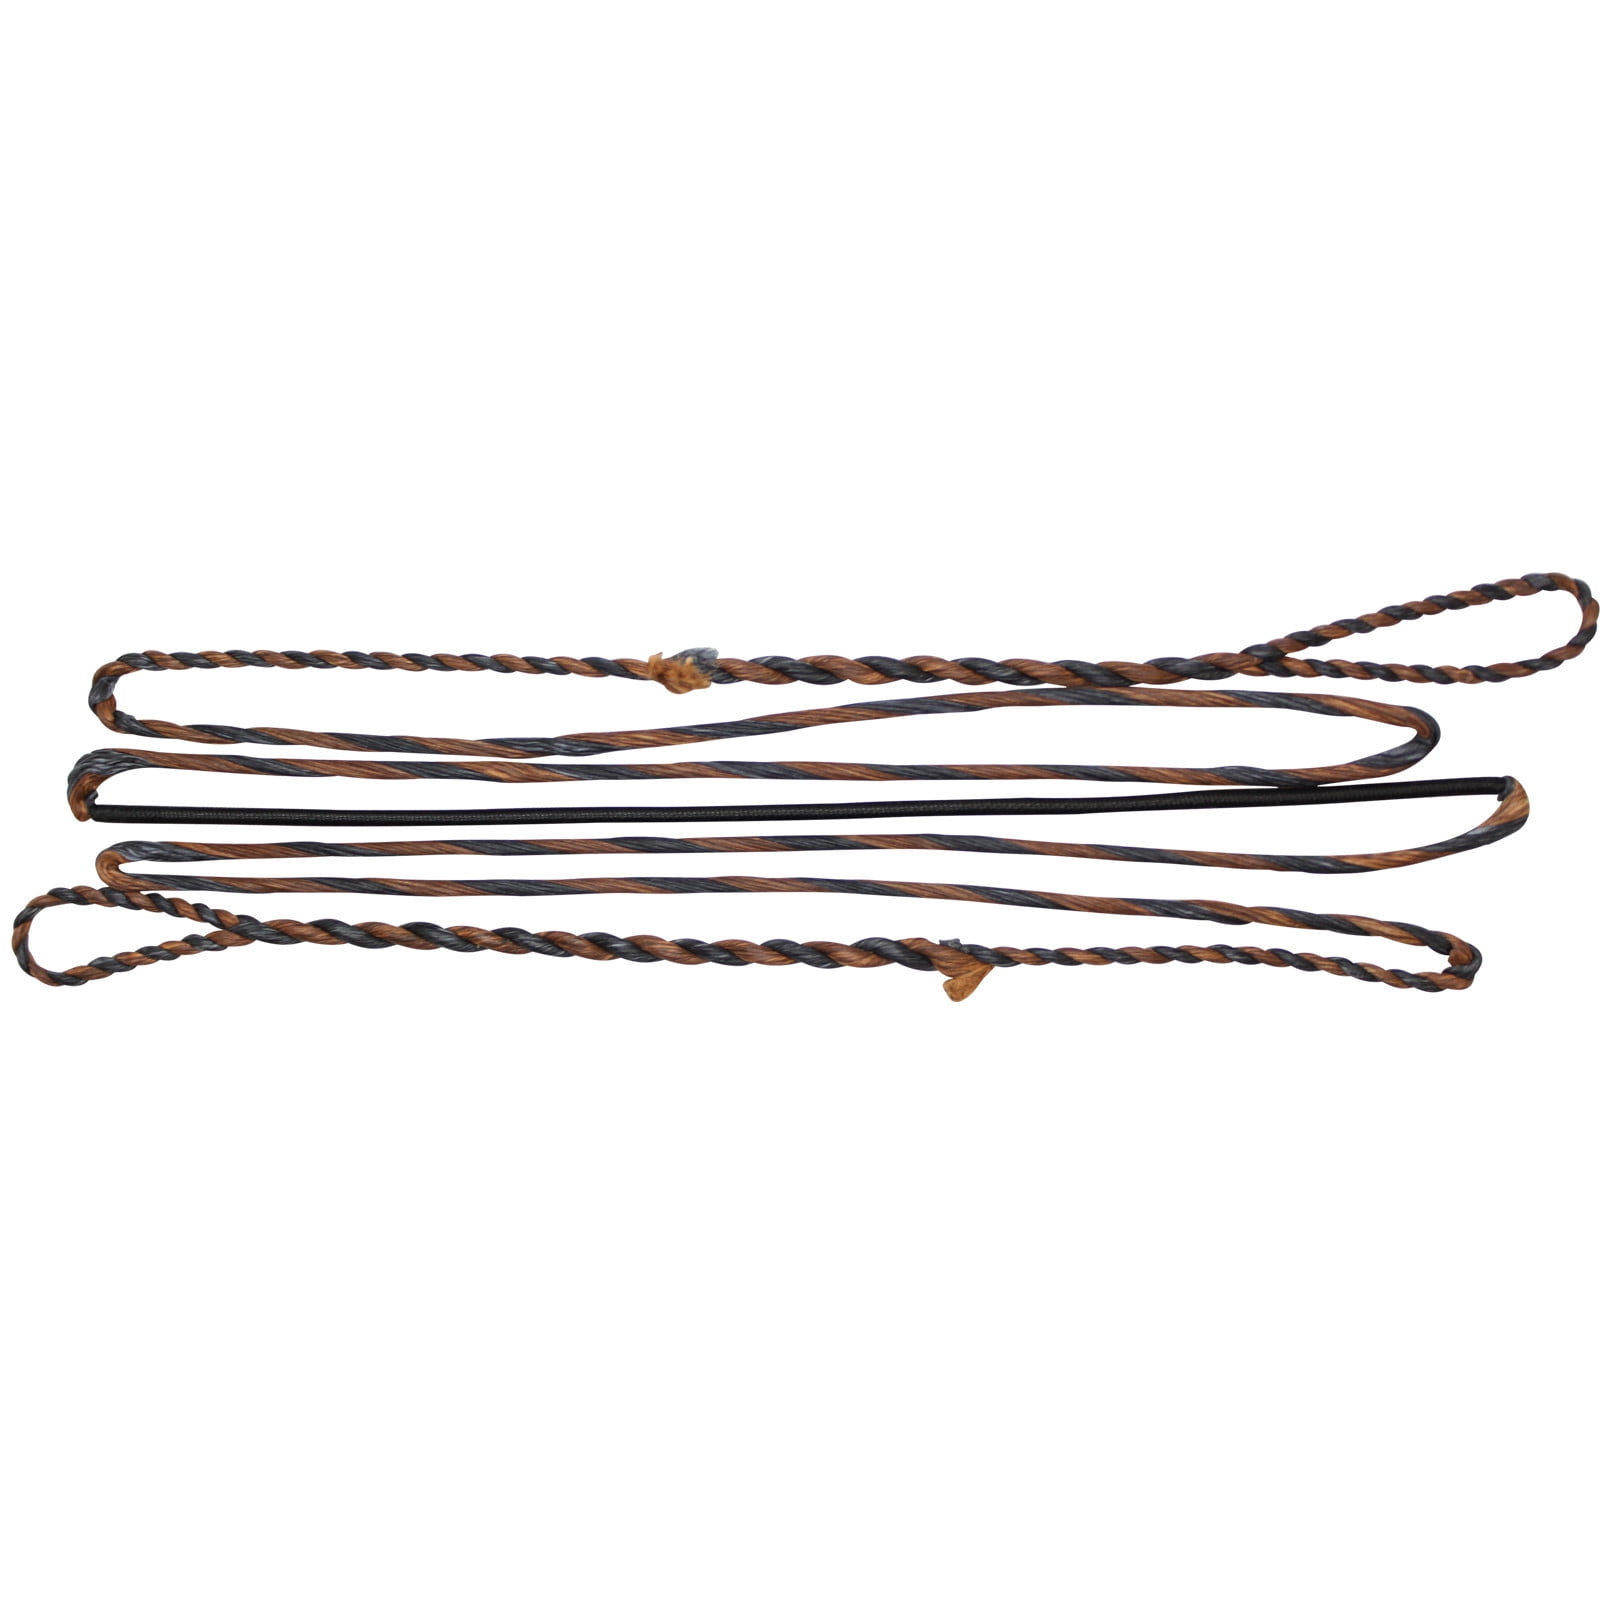 B50 56"  60 AMO Recurve Bow String 14 strands Dacron Traditional 